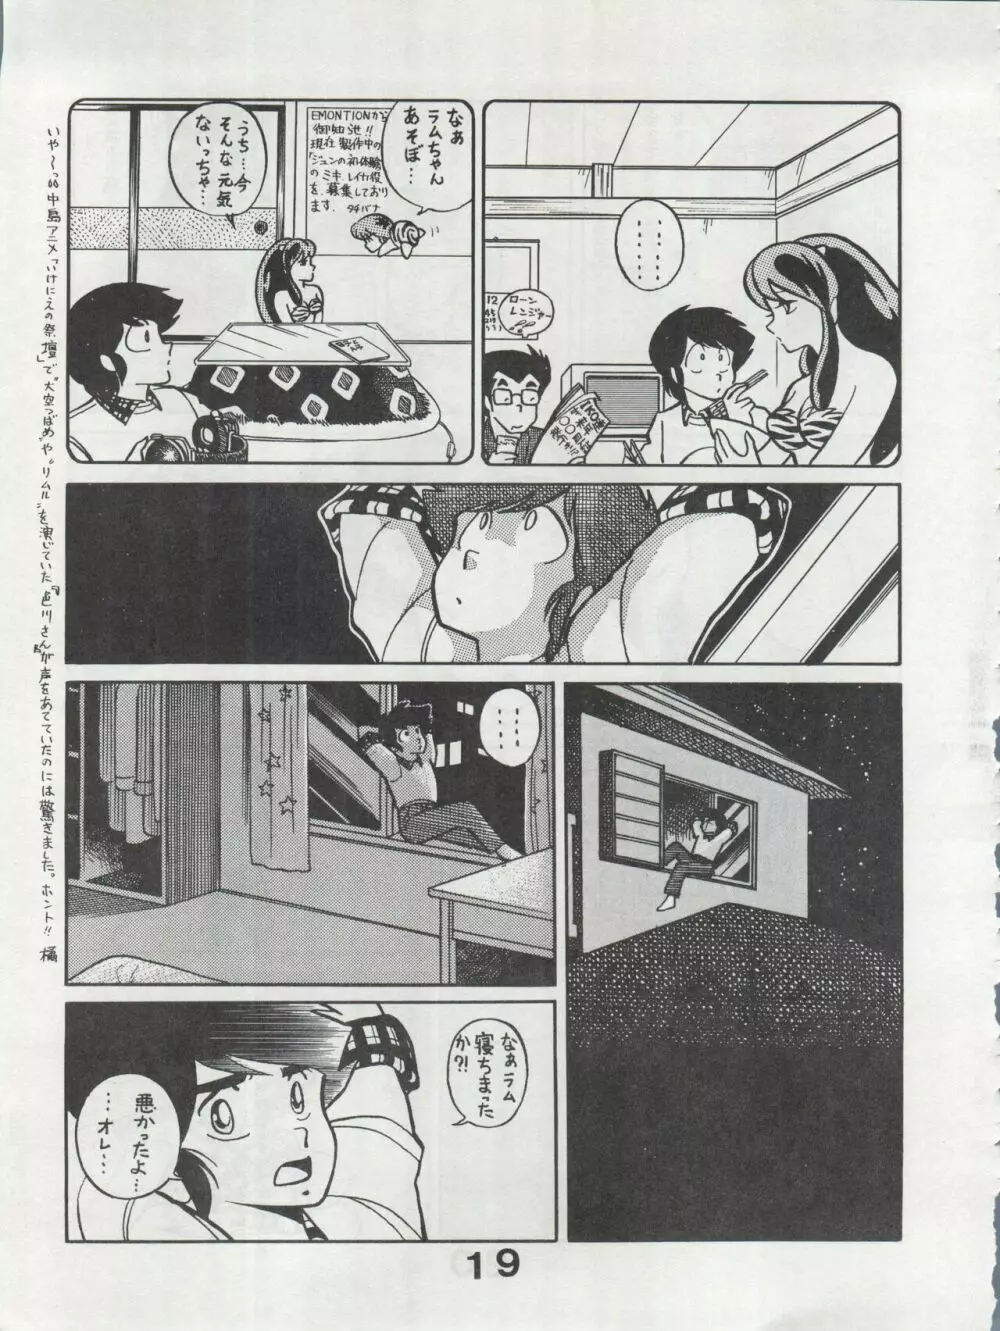 MoN MoN もんモン Vol.5 - page19